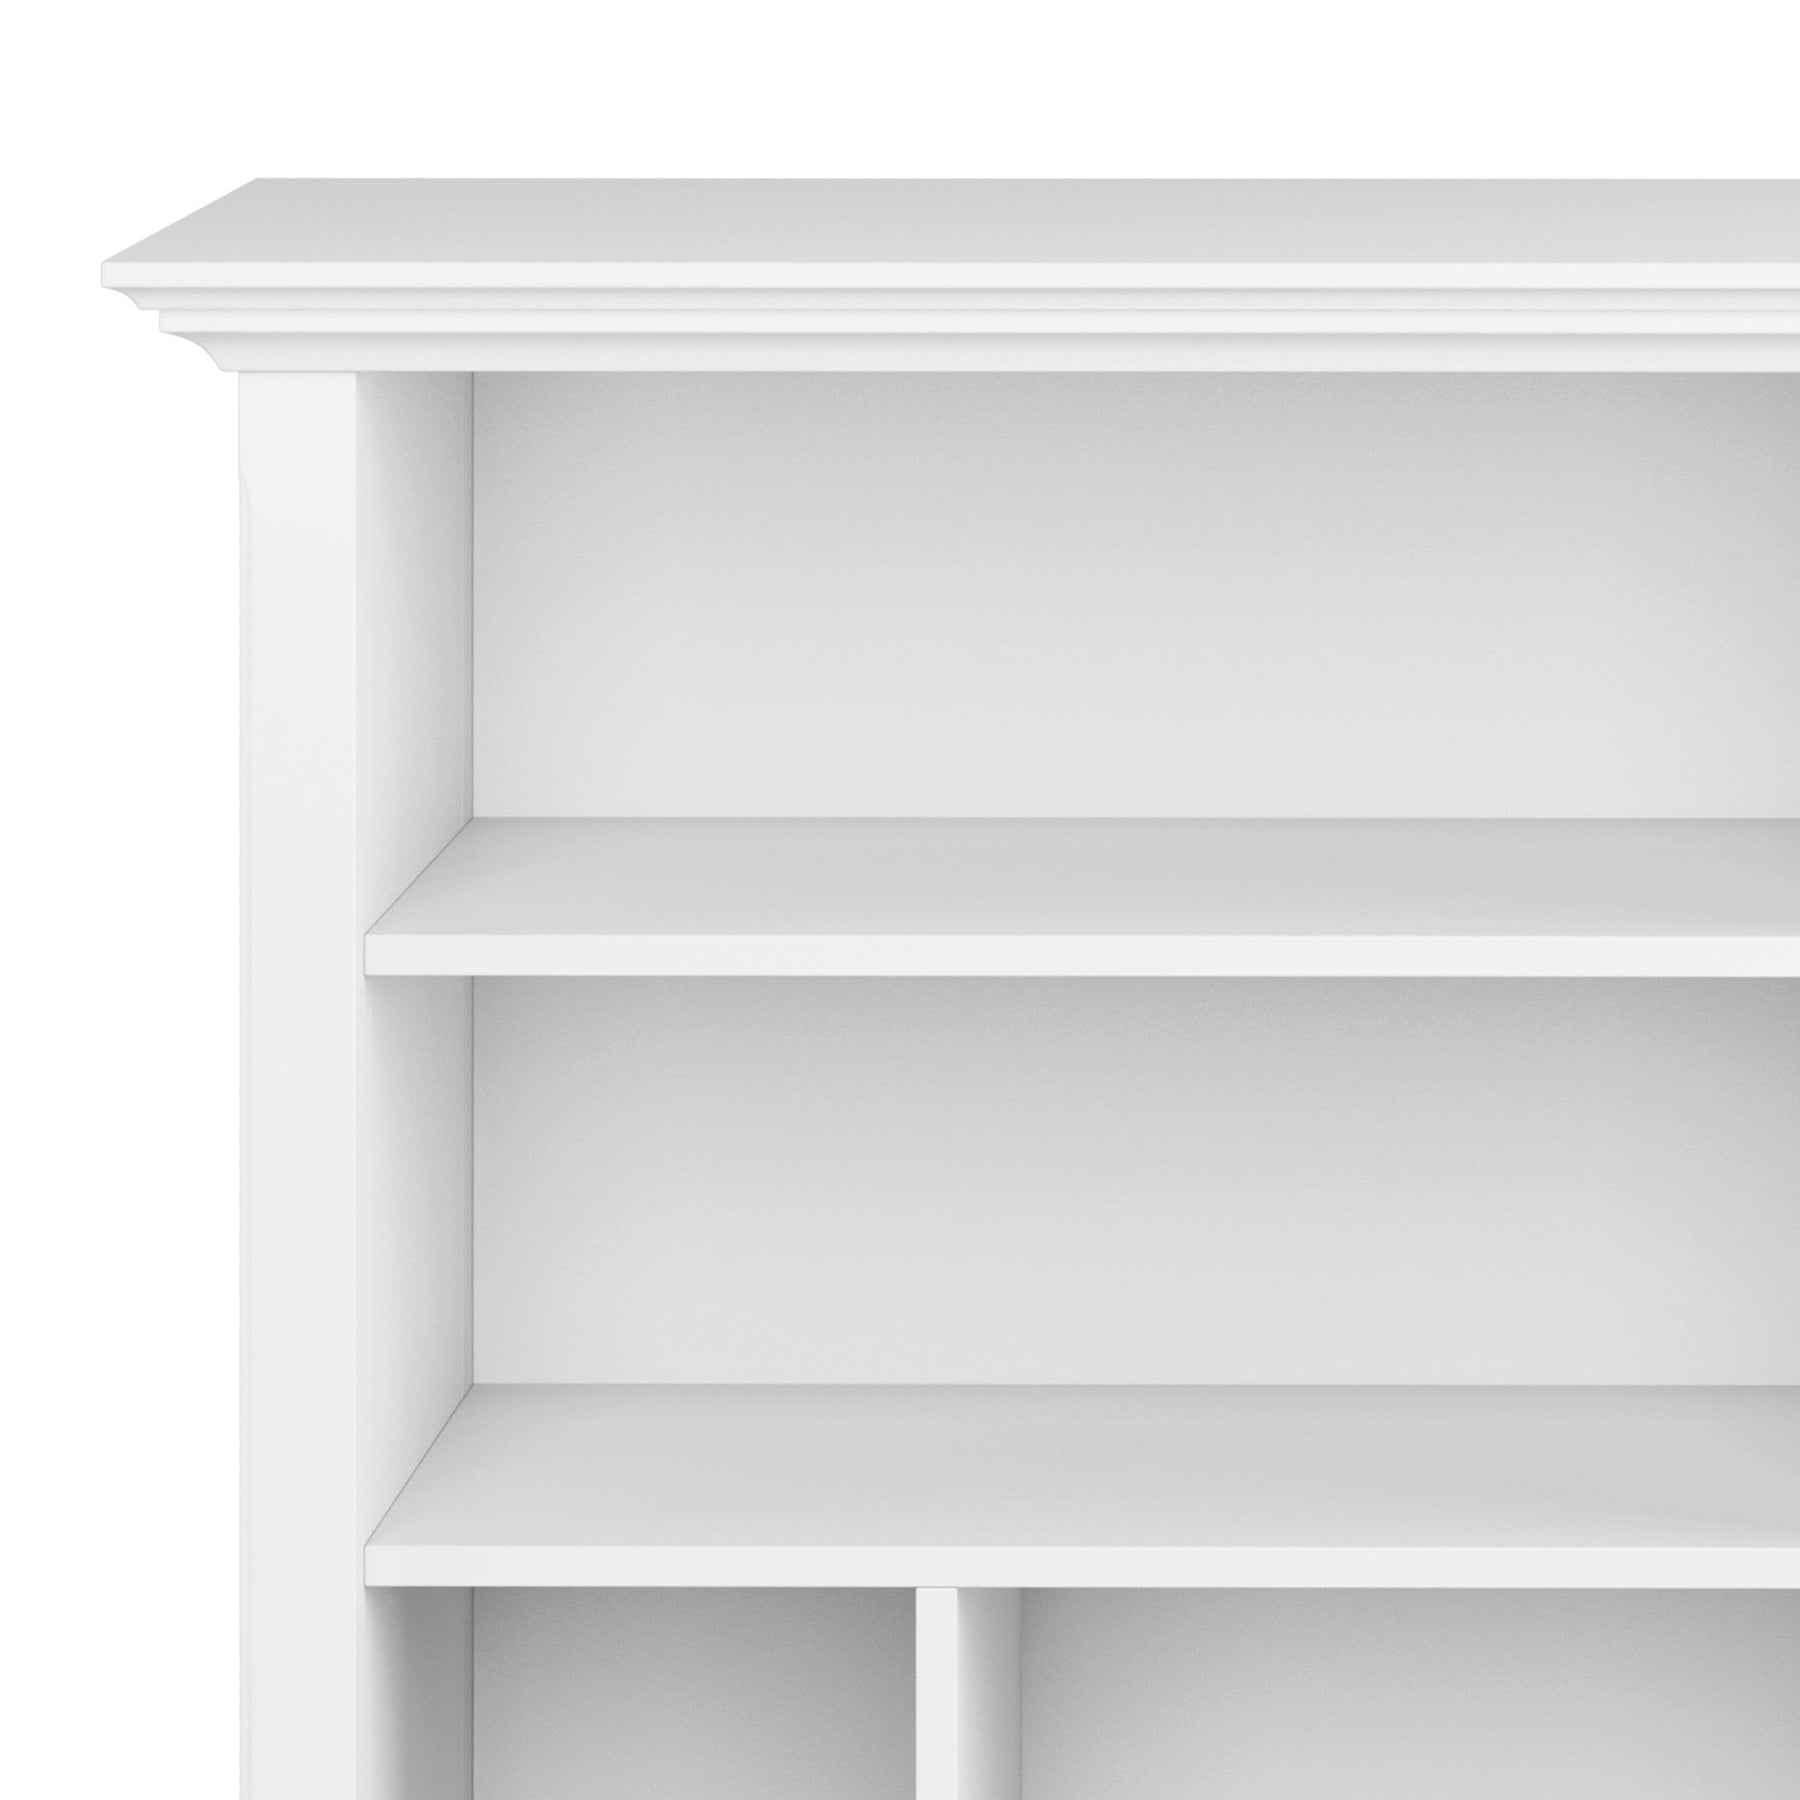 White | Amherst Multi-Cube Bookcase & Storage Unit